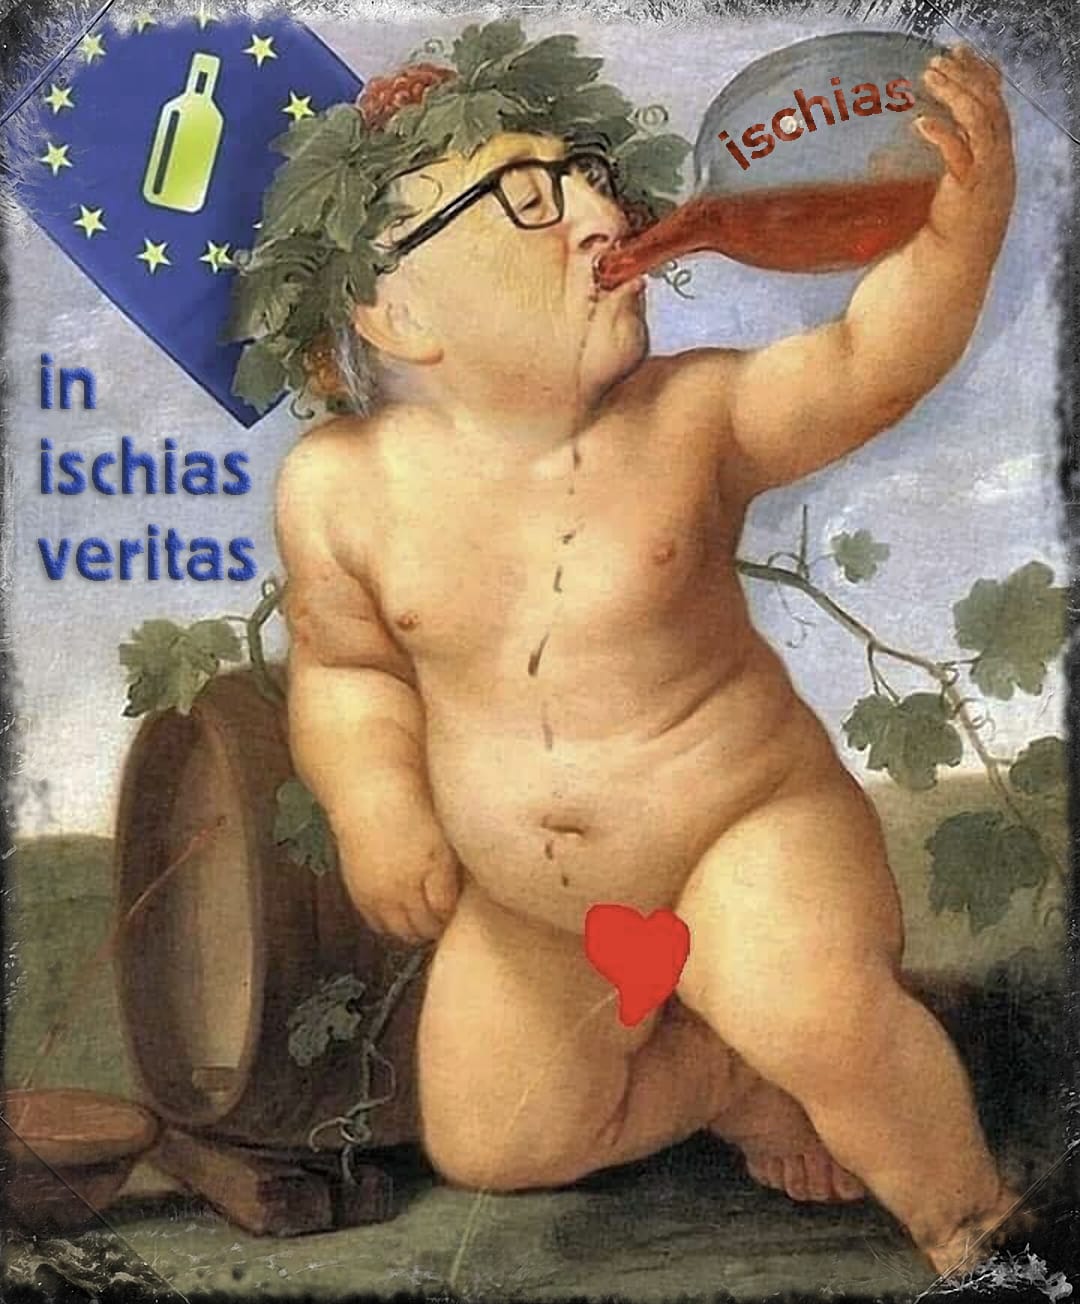 Jean Claude Juncker in ischias veritas EU europaeische Union Gesundheit politische Korrektheit qpress